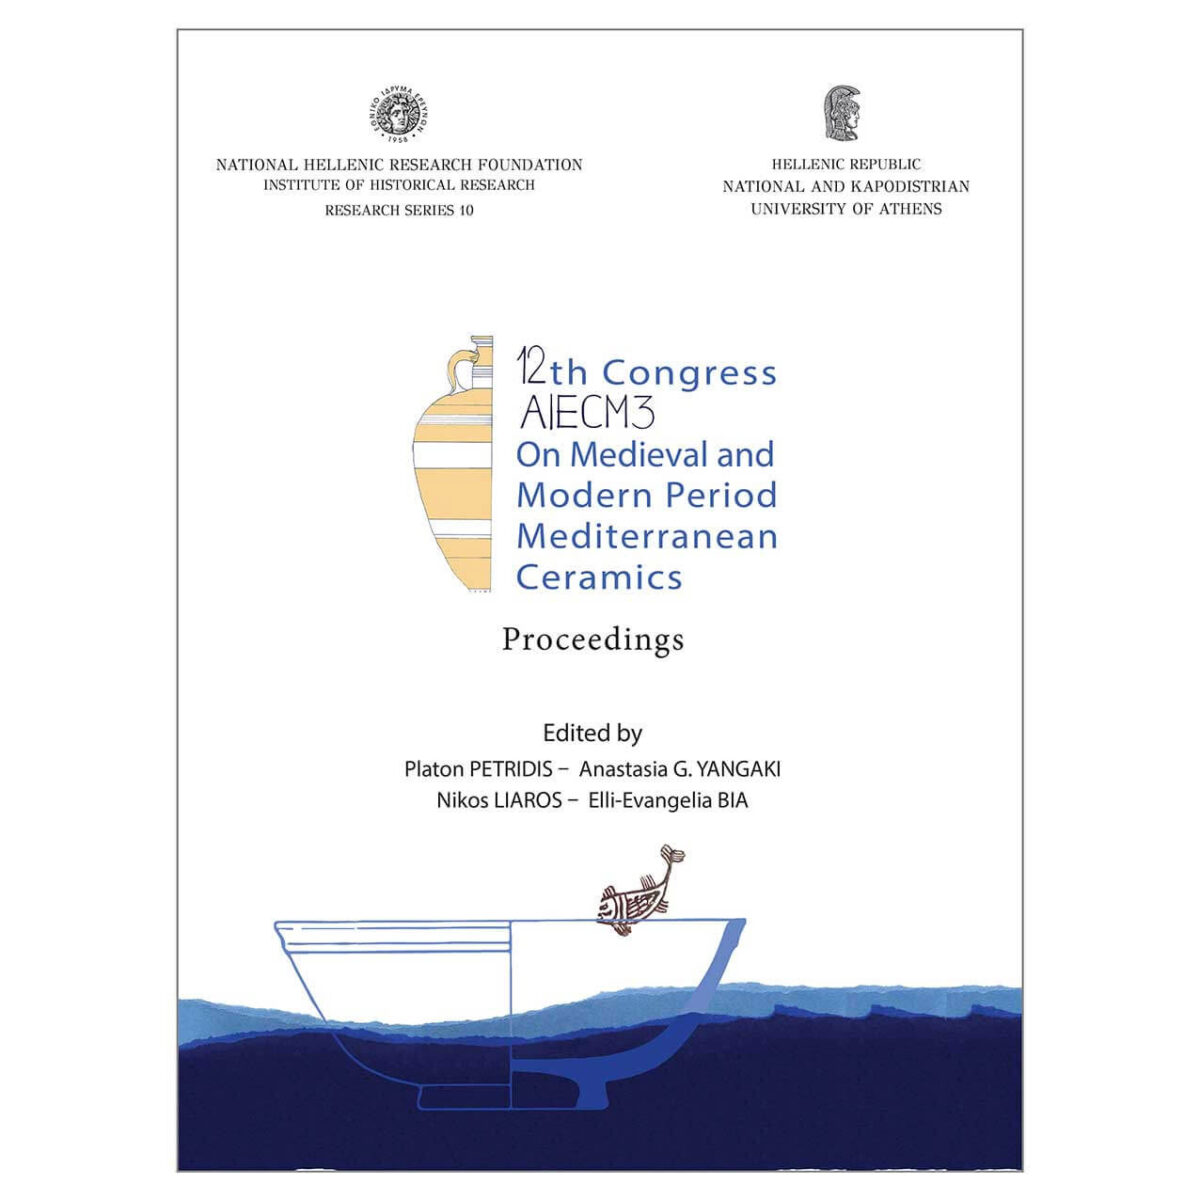 12th Congress AIECM3 On Medieval and Modern Period Mediterranean Ceramics